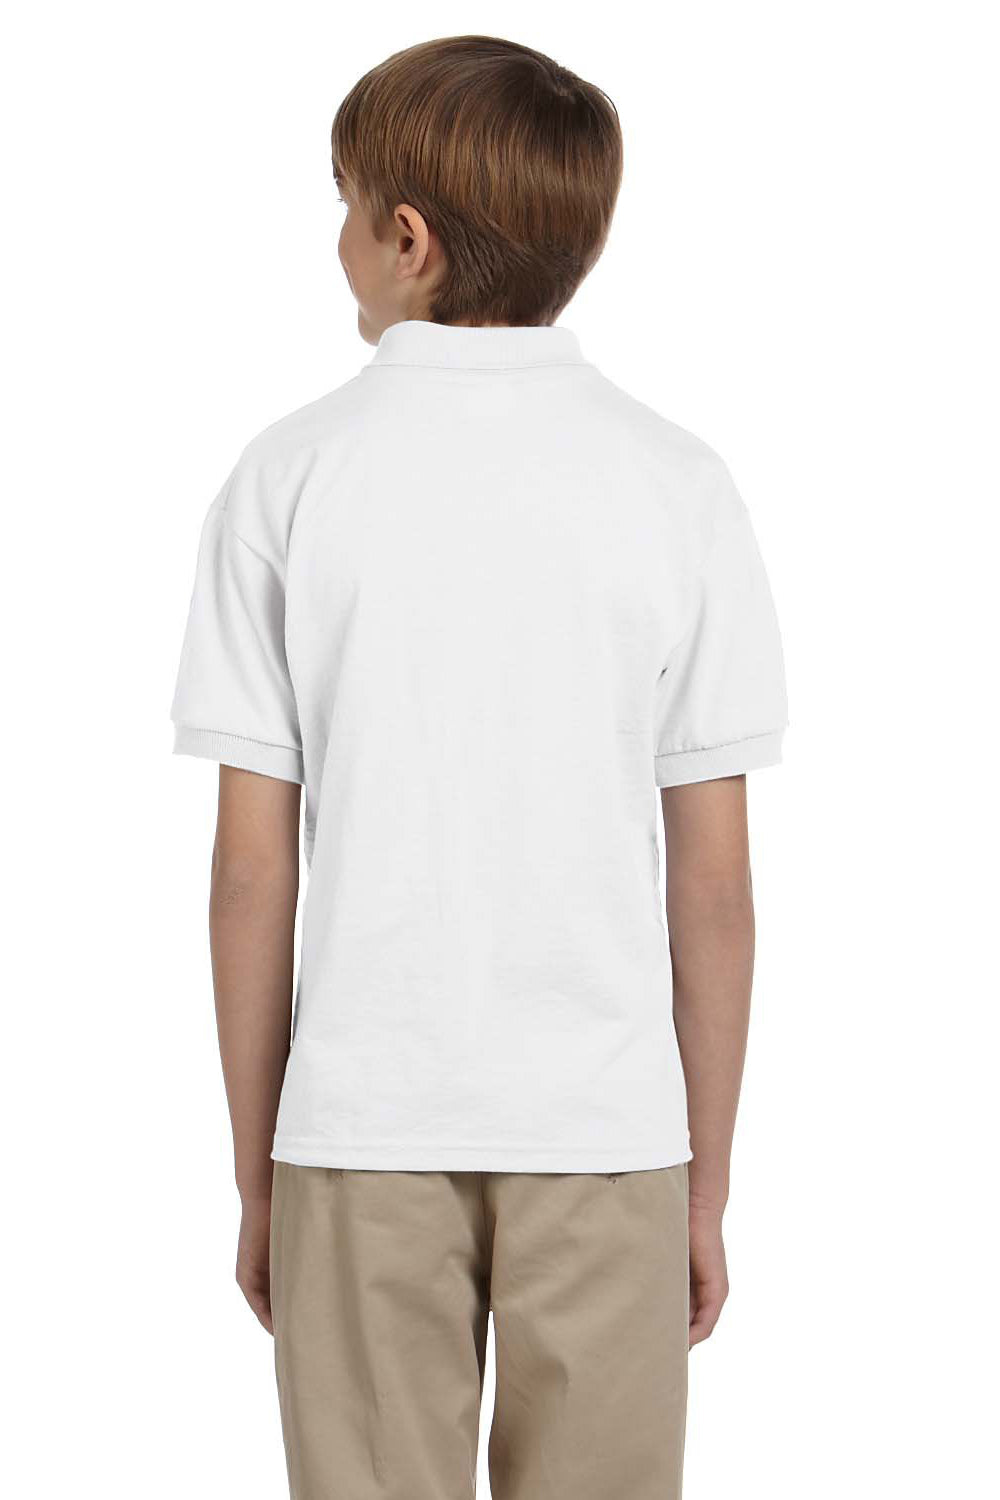 Gildan G880B Youth DryBlend Moisture Wicking Short Sleeve Polo Shirt White Back